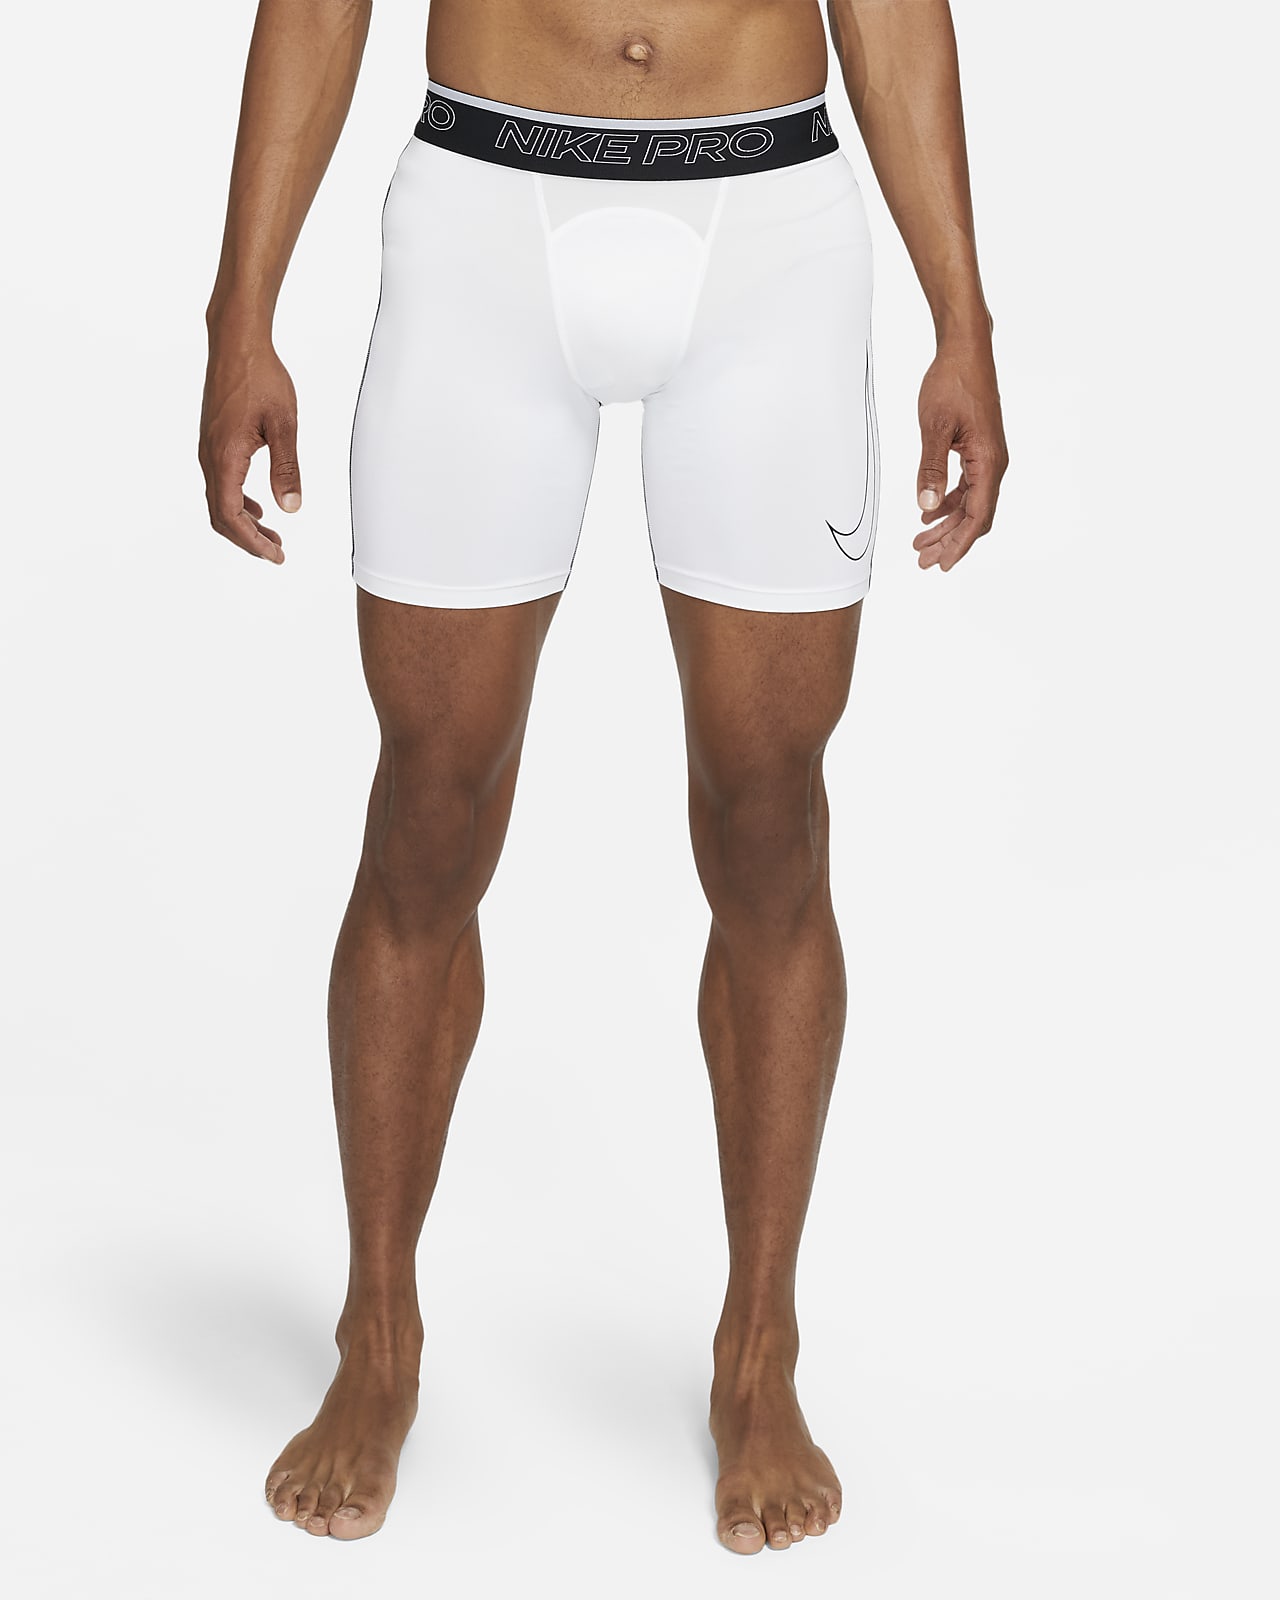 Shorts para Nike Pro Dri-FIT.